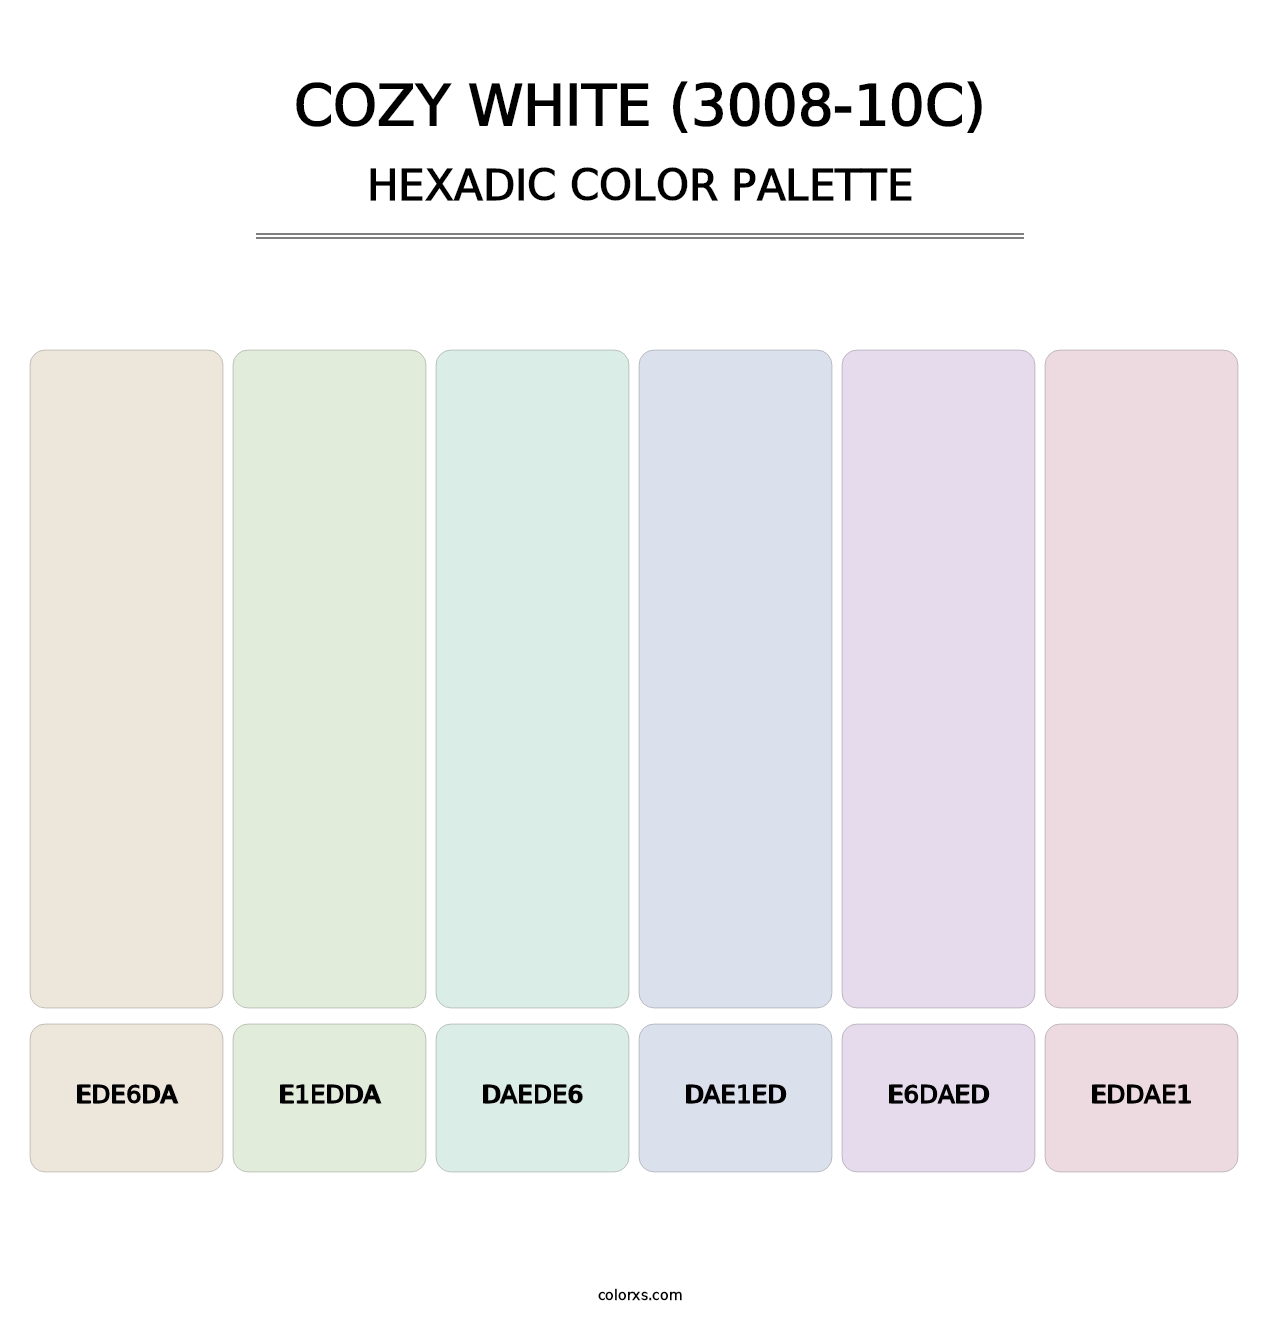 Cozy White (3008-10C) - Hexadic Color Palette